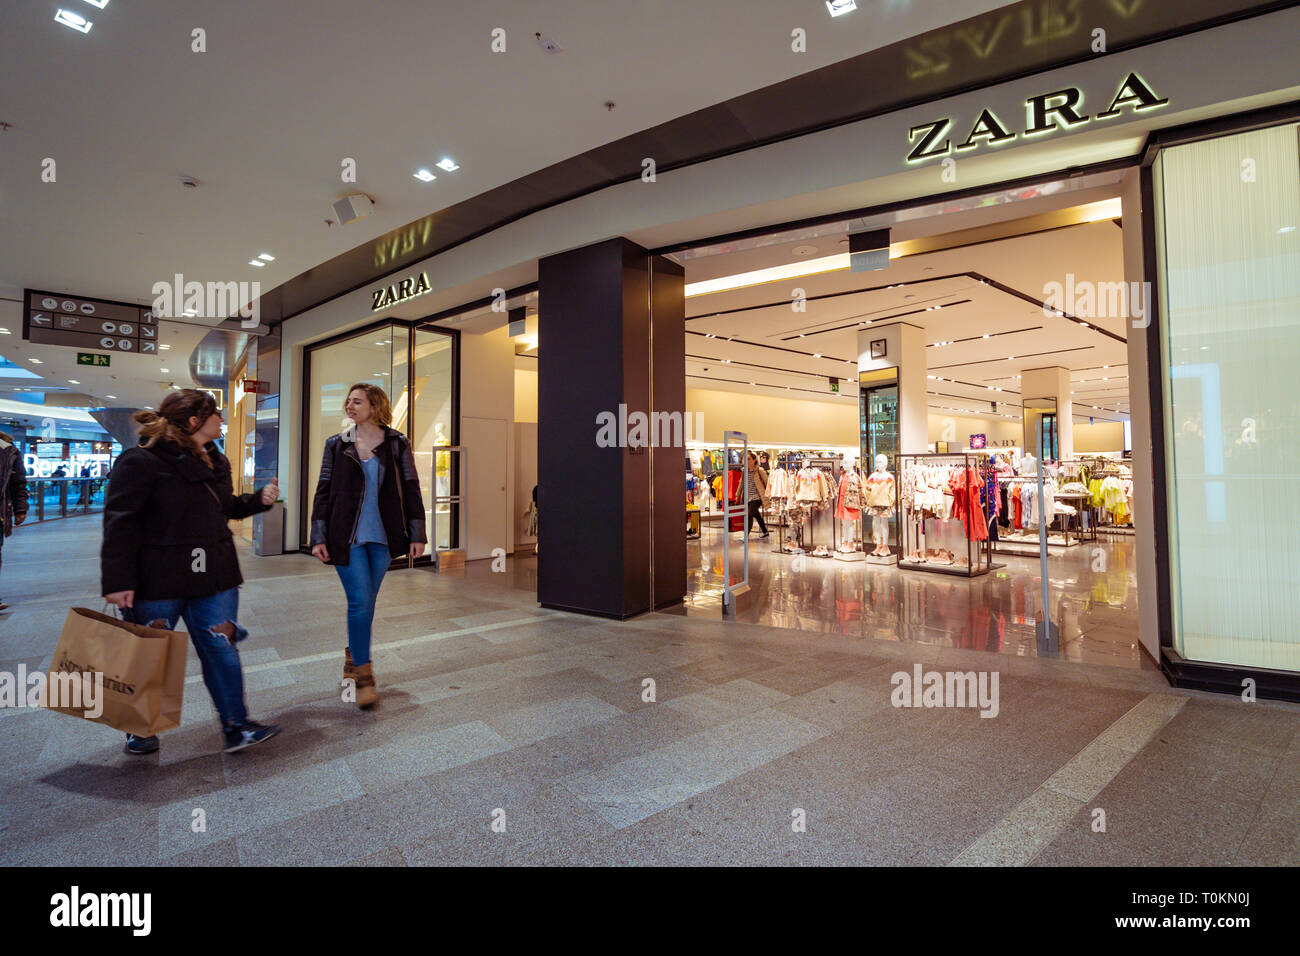 Reus, Spain. March 2019: ZARA fashion store in La Fira shopping mall Stock  Photo - Alamy